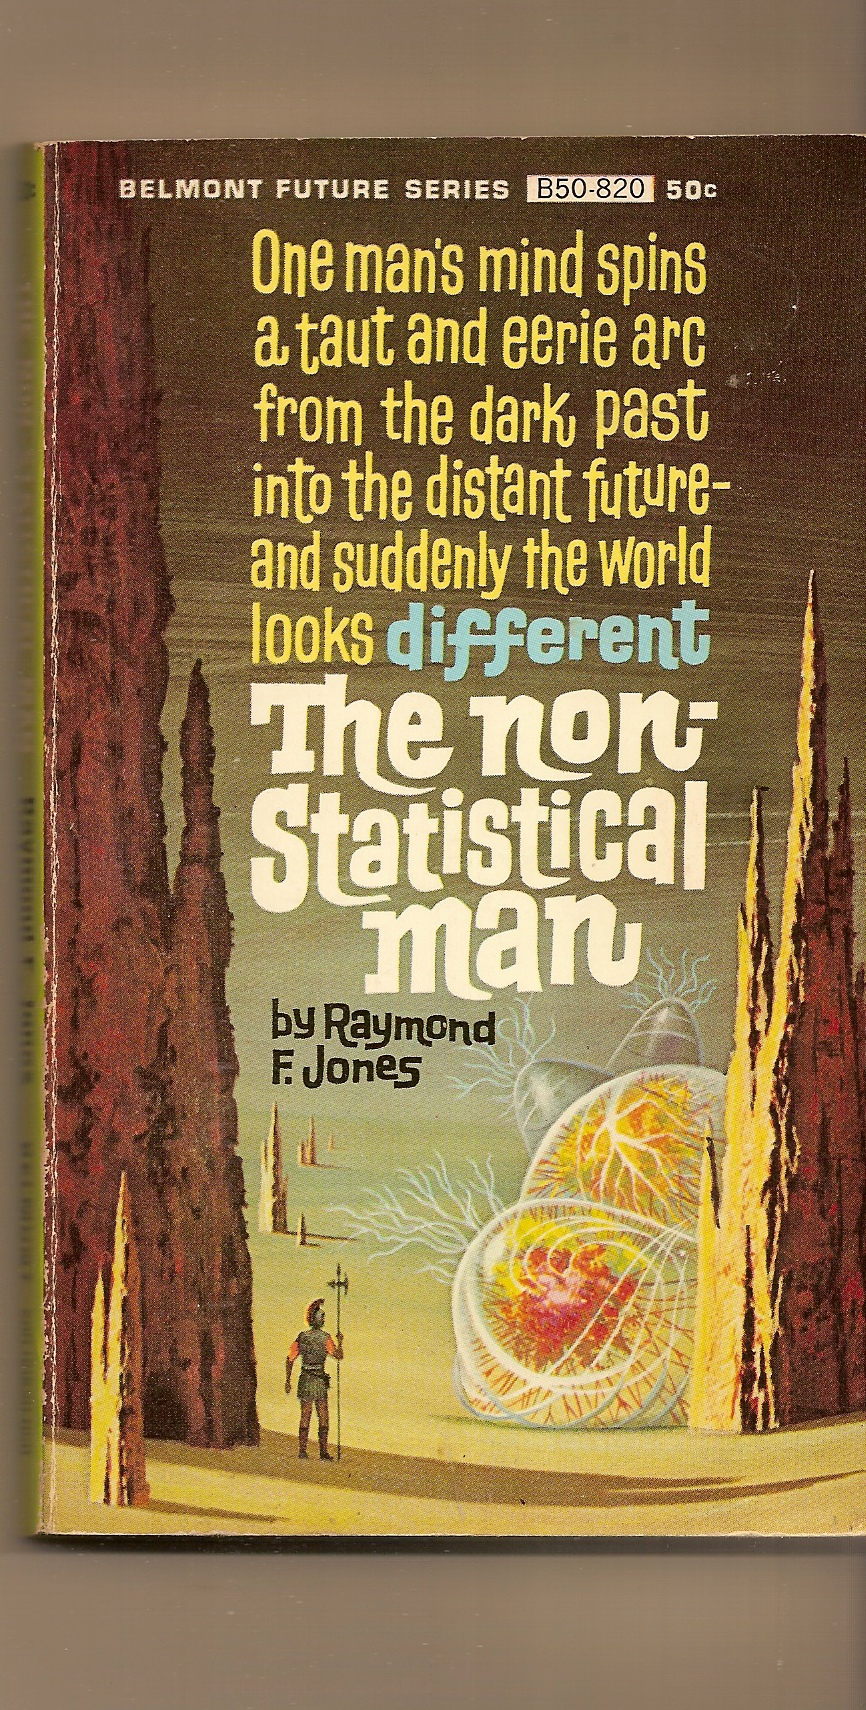 JONES RAYMOND F. - Non-Statistical Man, the